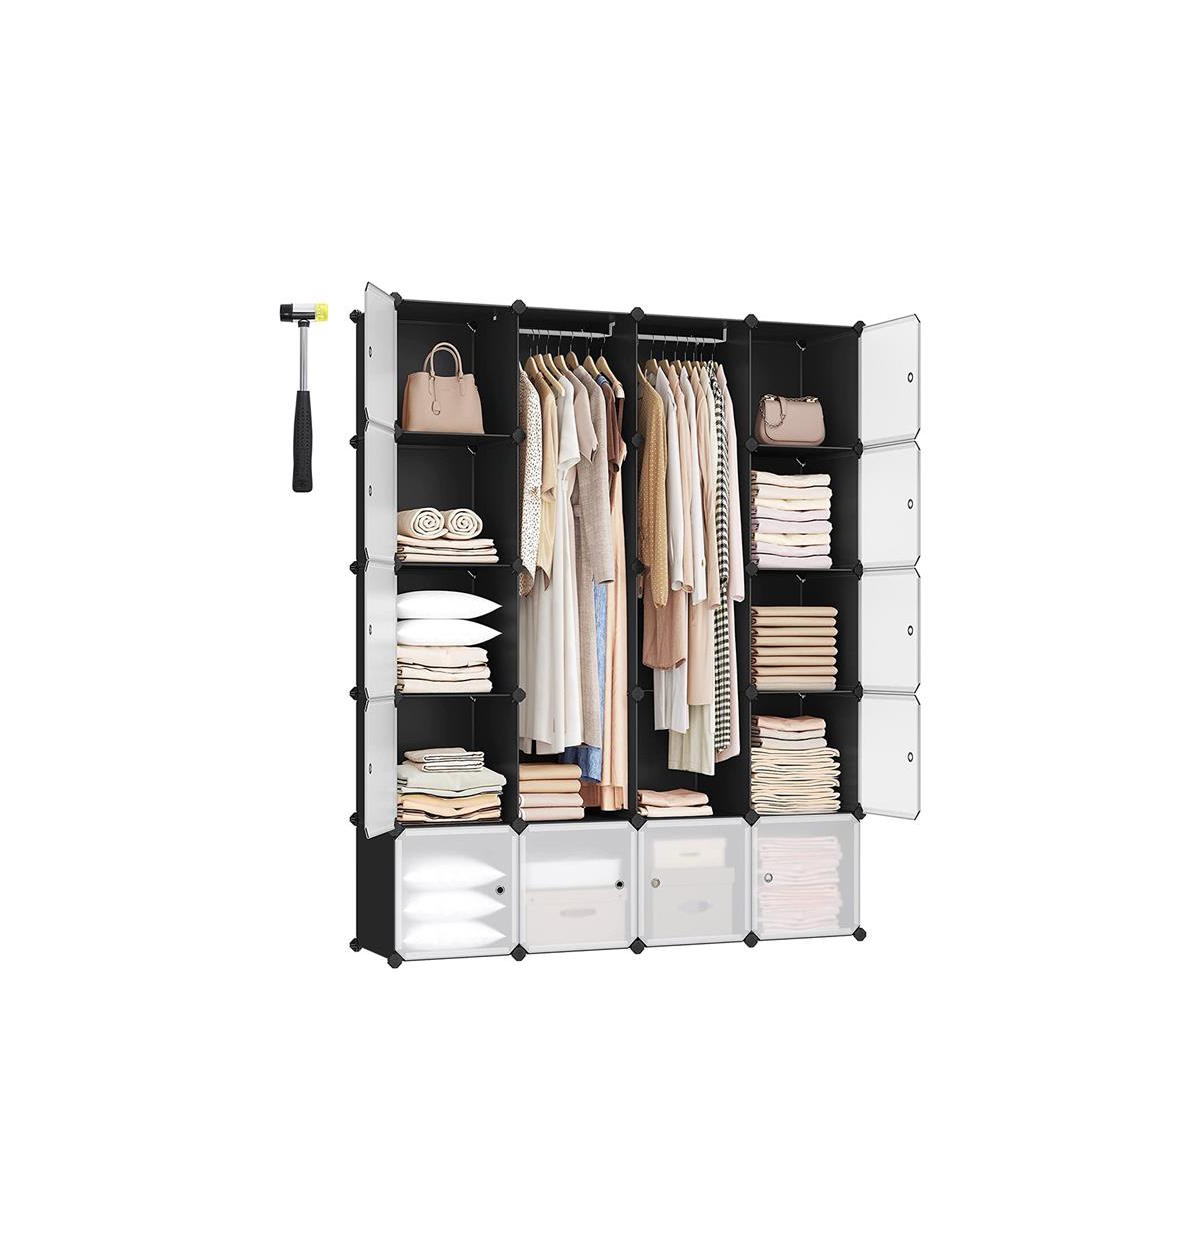 Cube Storage Organizer, Large Plastic Portable Closet Wardrobe, Interlocking Storage Unit - Black